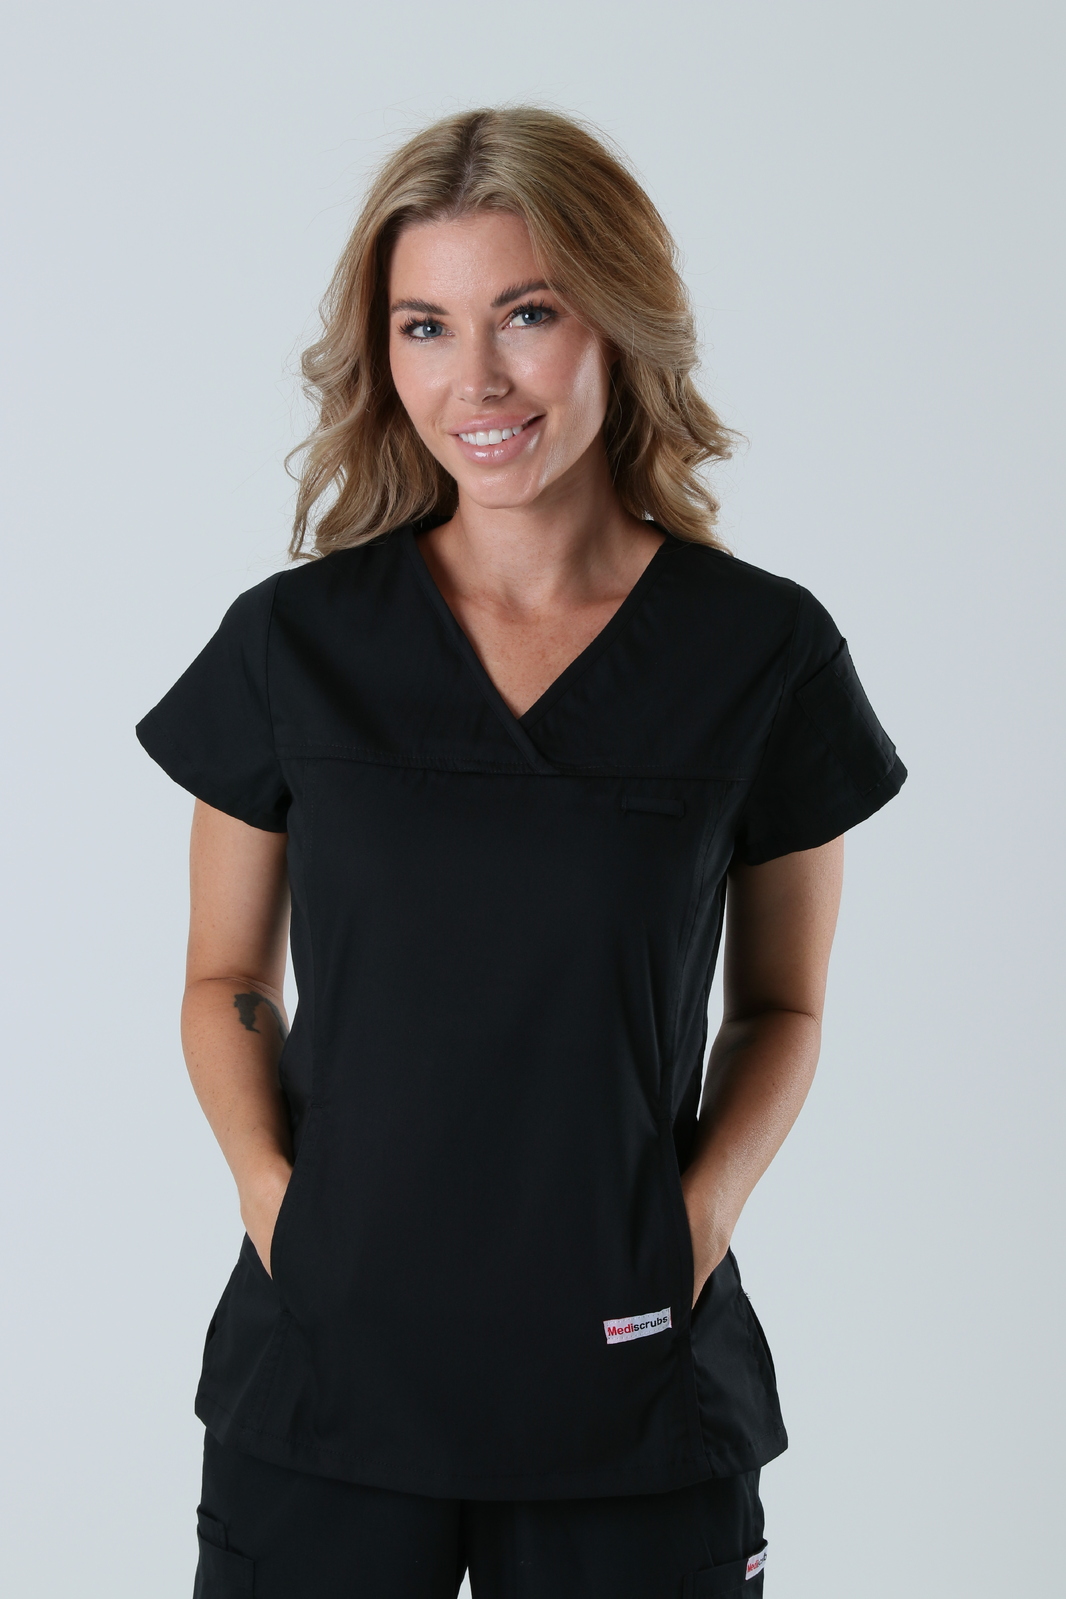 Queensland Children's Hospital Emergency Department Senior Medical Officer Uniform Top Bundle  (Women's Fit Top in Black  incl Logos)